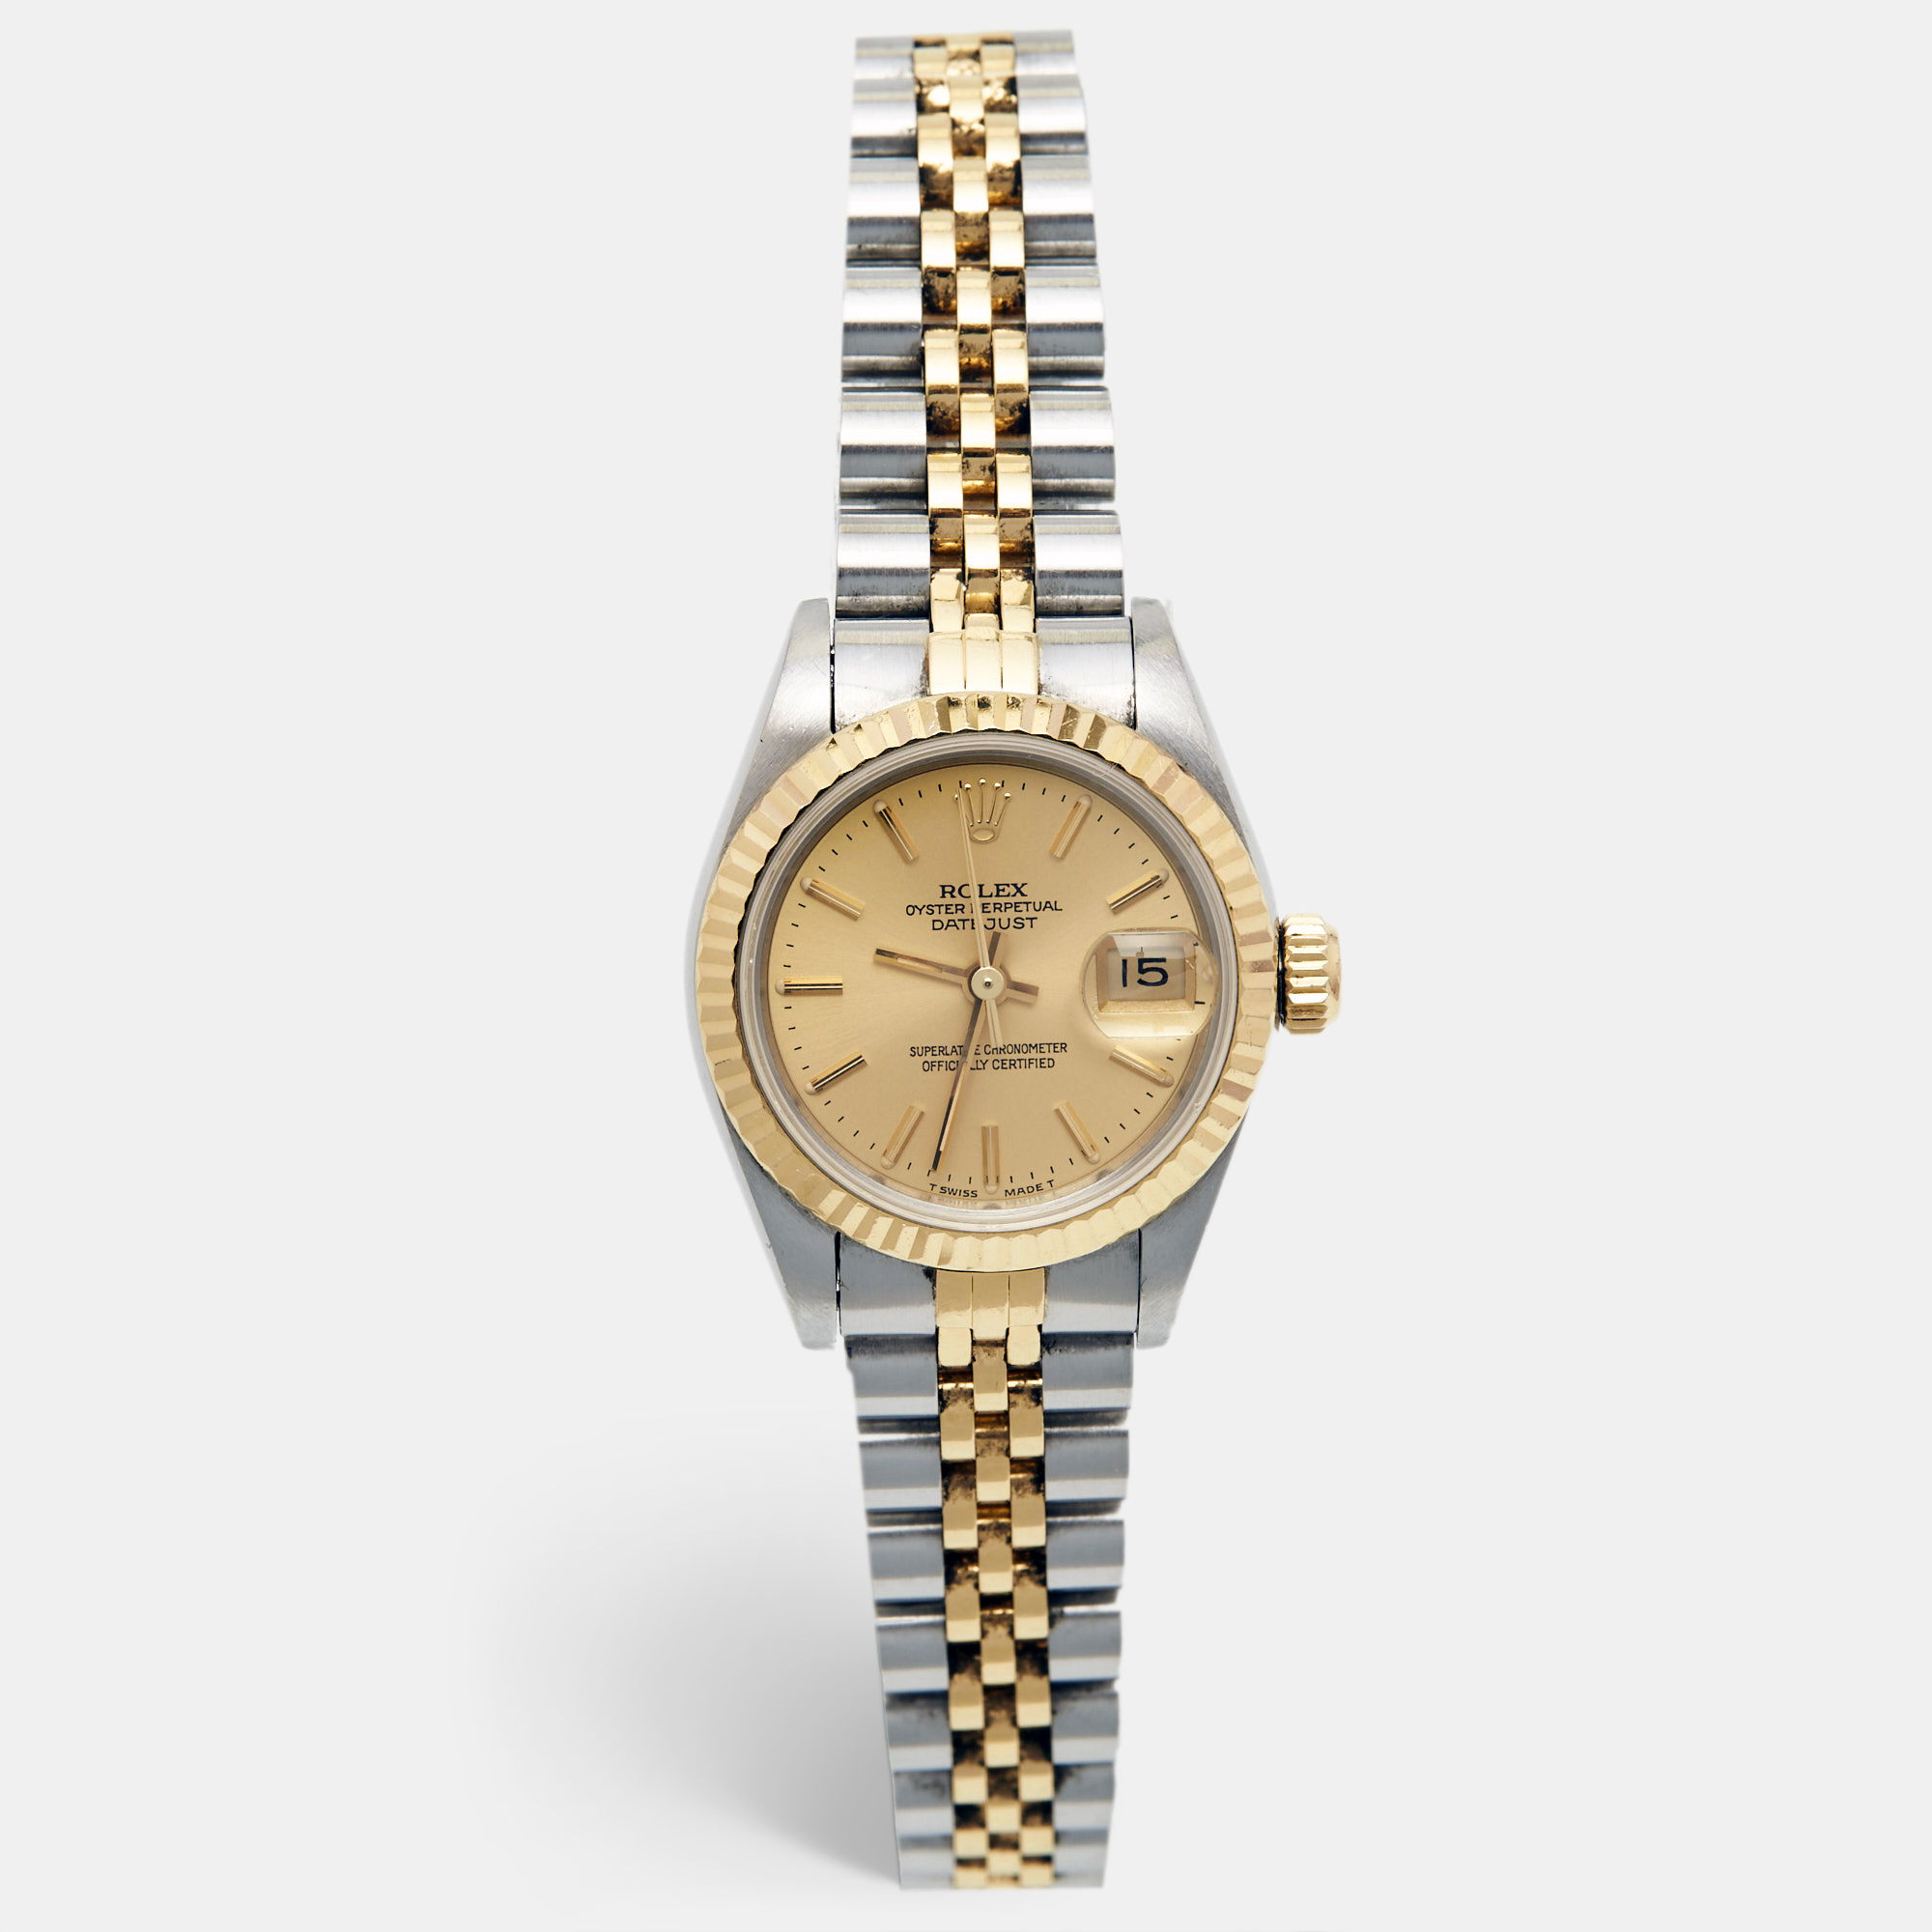 Rolex champagne 18k yellow gold stainless steel datejust 69173 women's wristwatch 26 mm